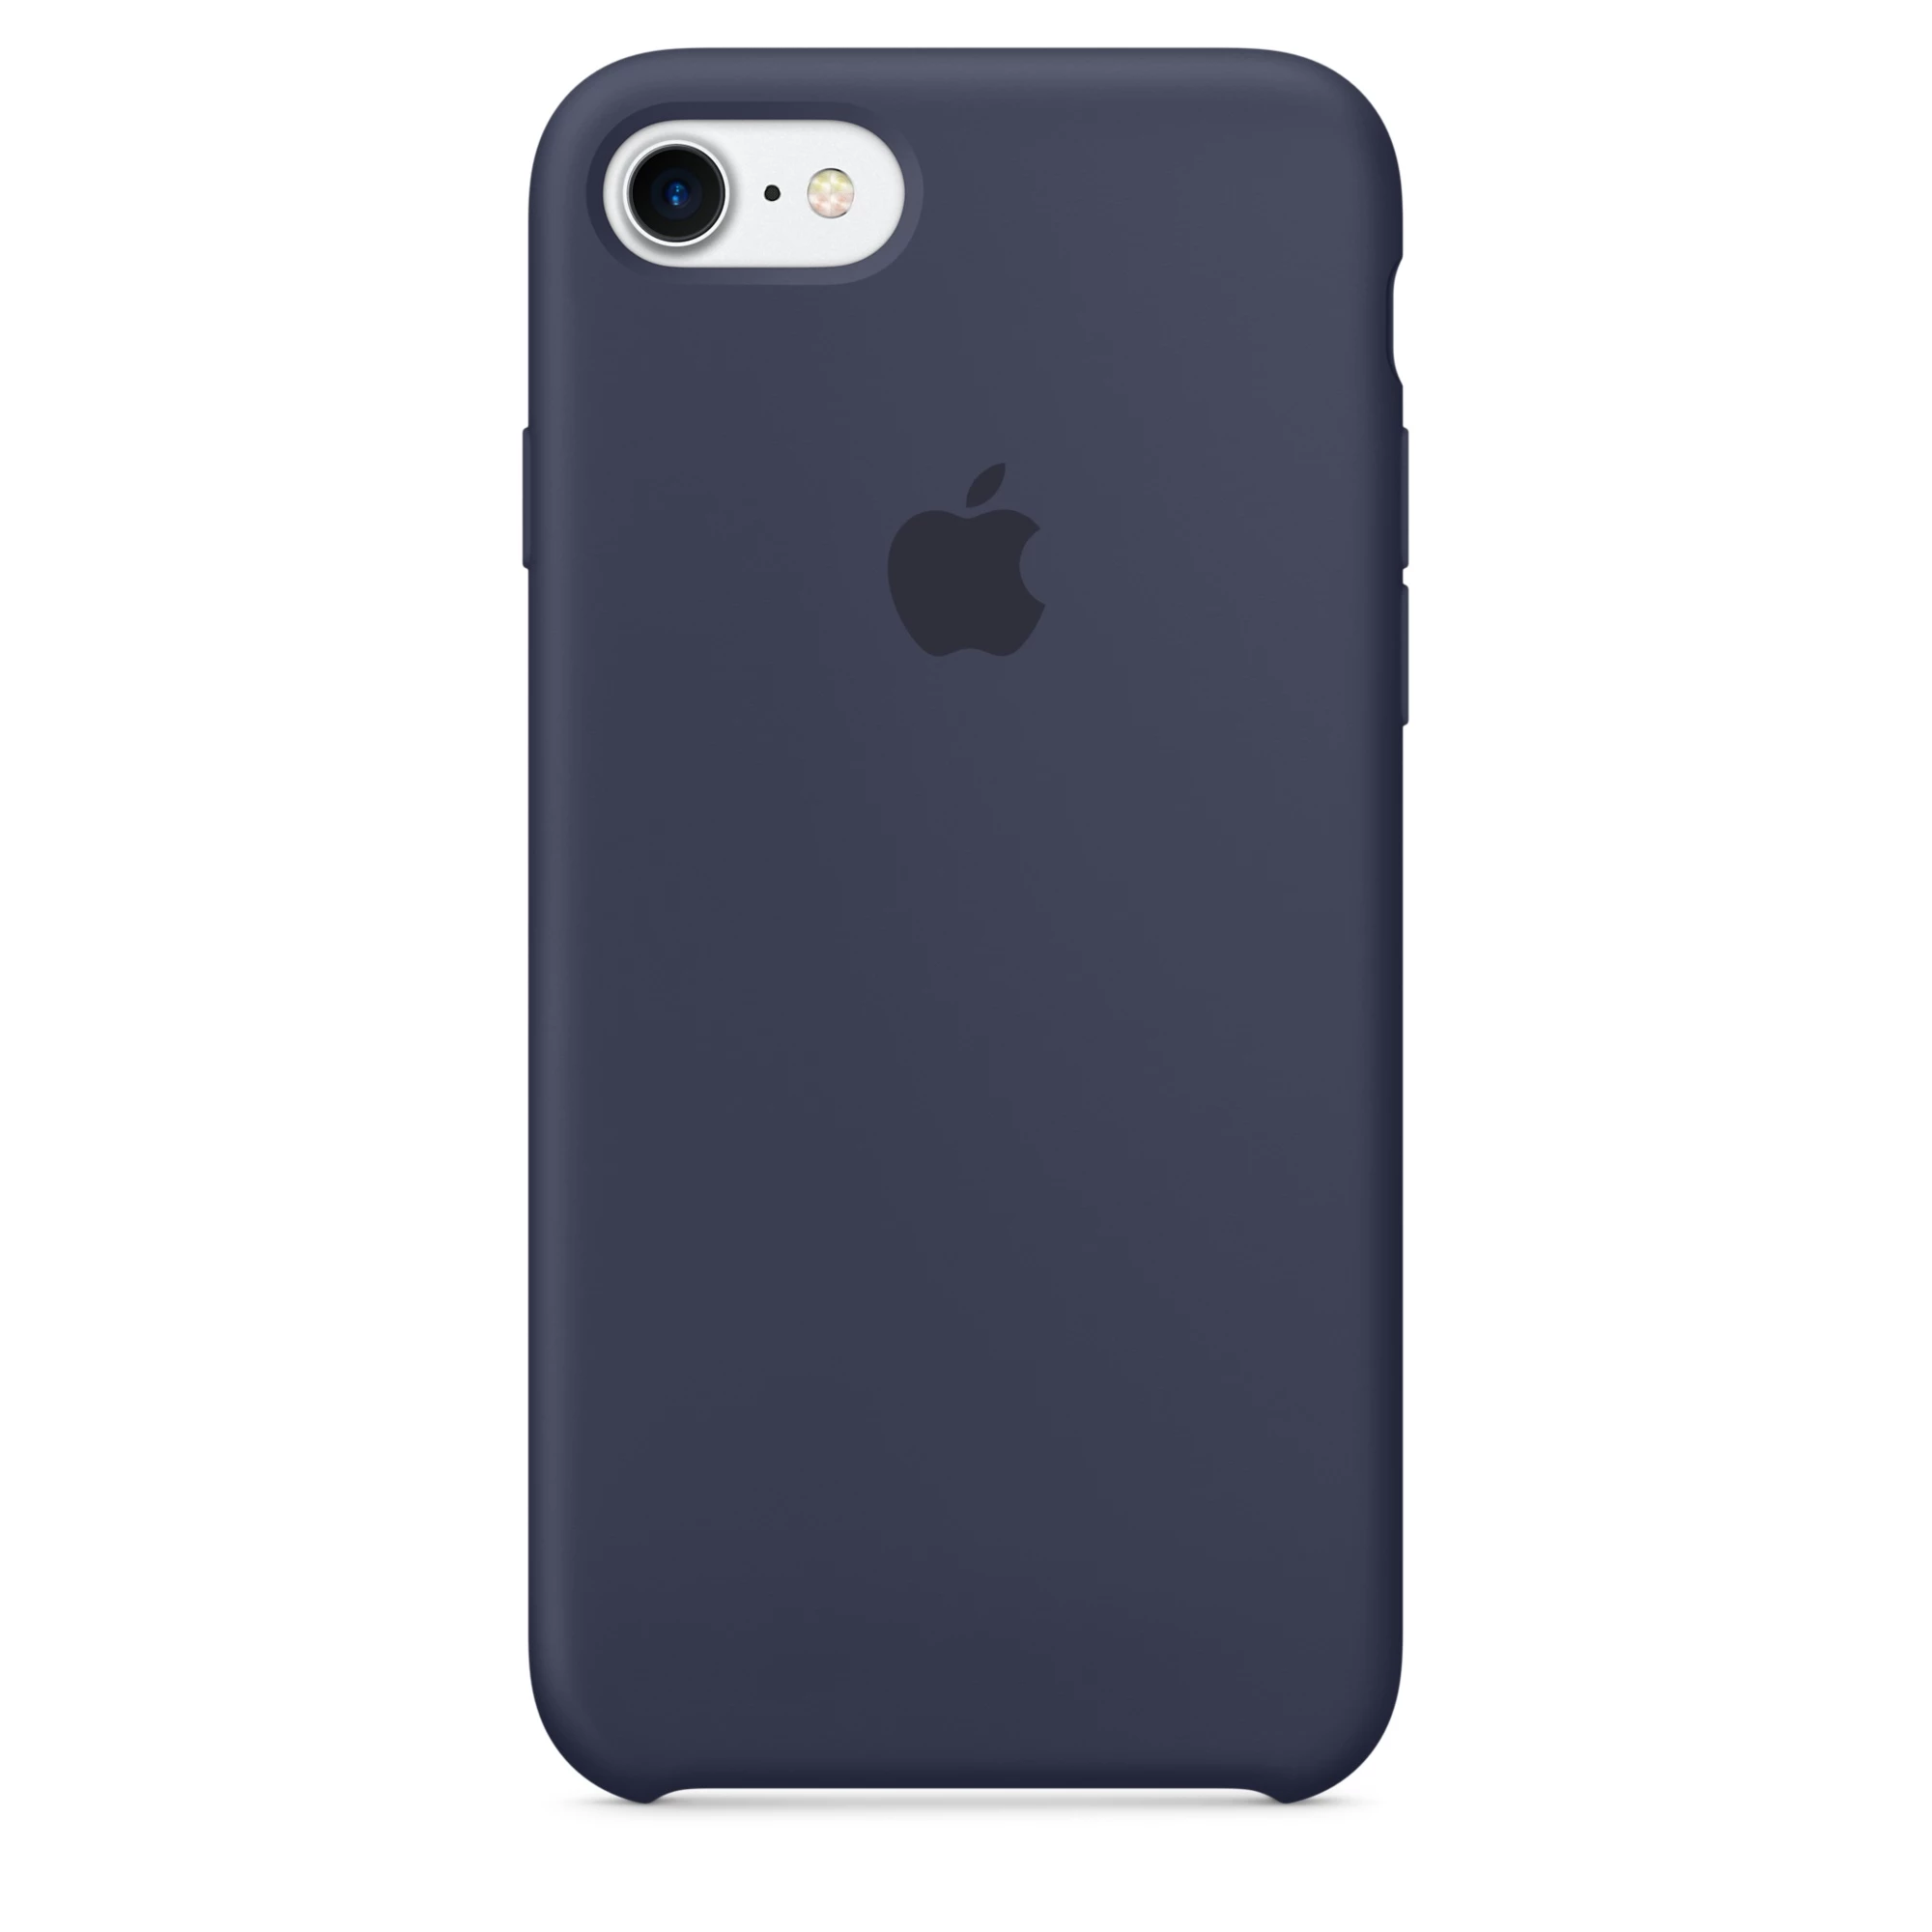 Apple iPhone 7/8/SE-2 Silicone Case - Midnight Blue (MQGM2, MMWK2)